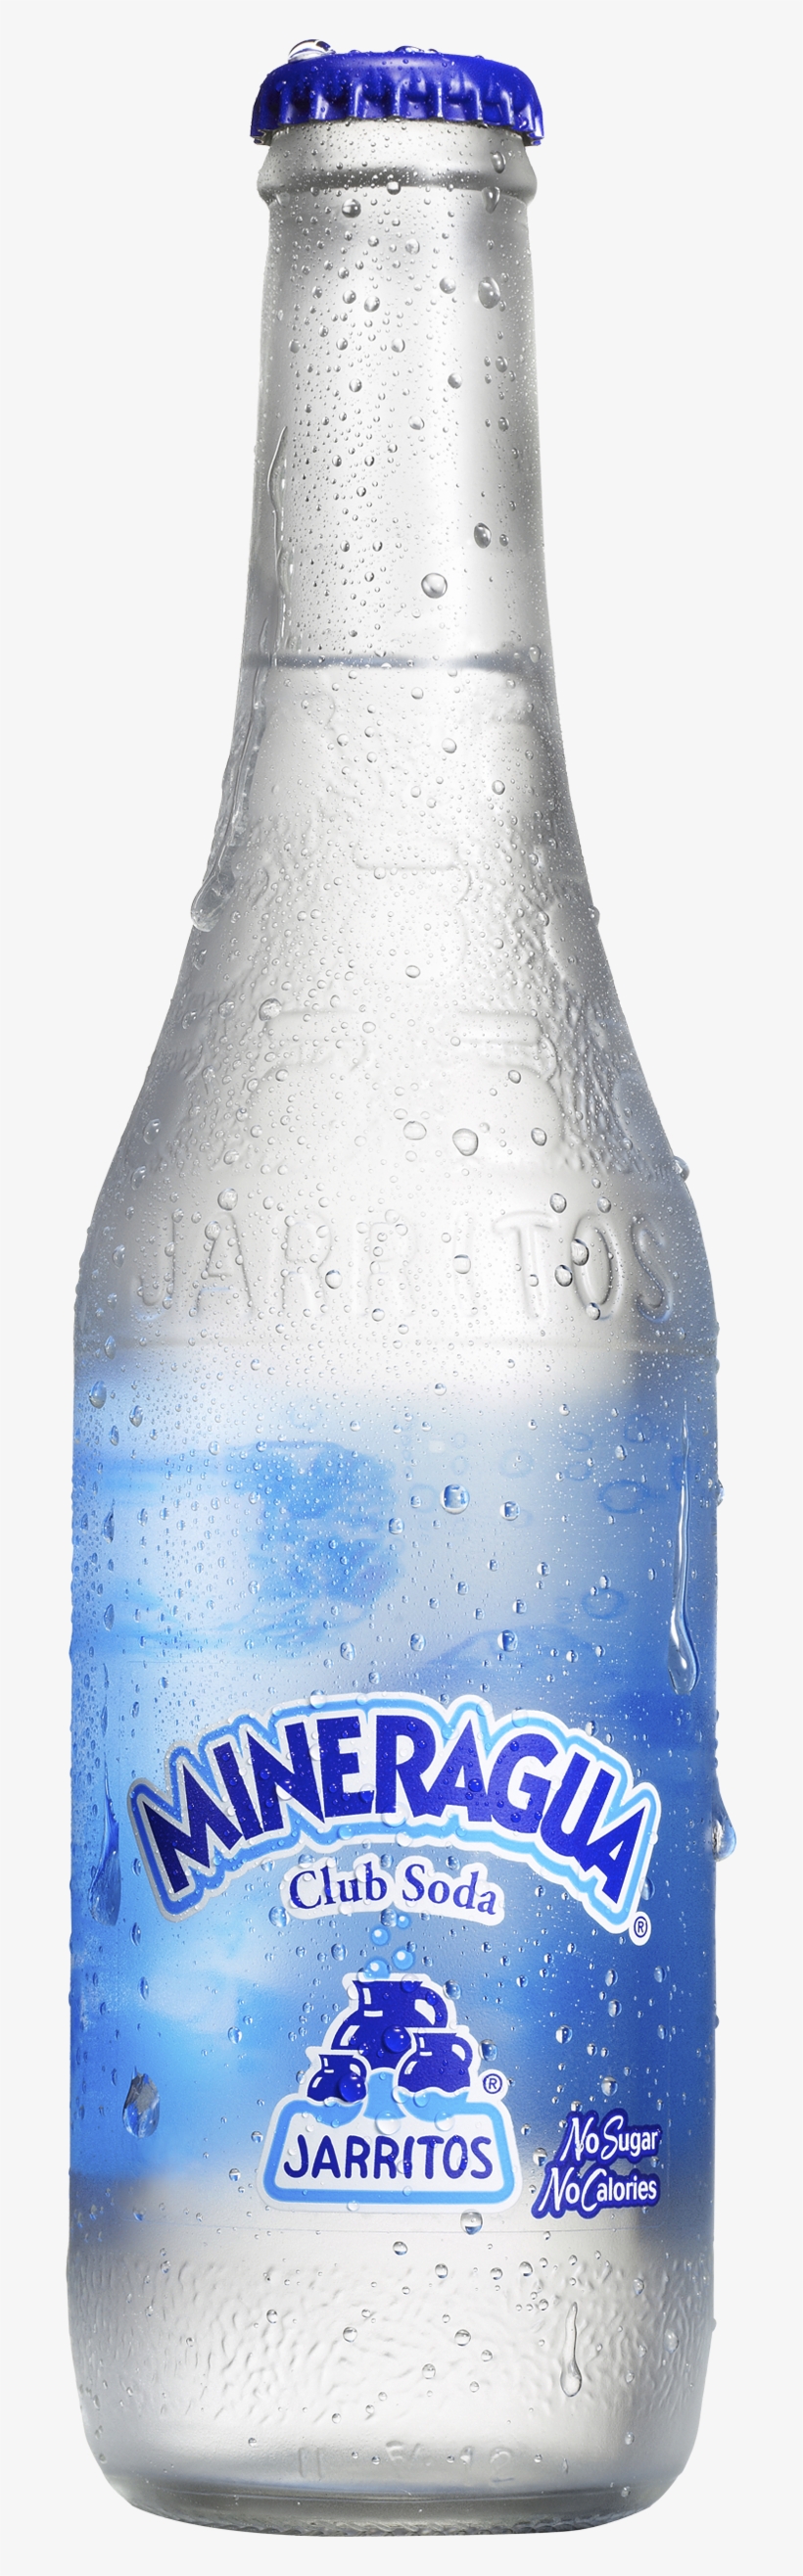 Jarritos Mineragua Club Soda, - Jarritos Sparkling Water - 12.5 Fl Oz Bottle, transparent png #1875981